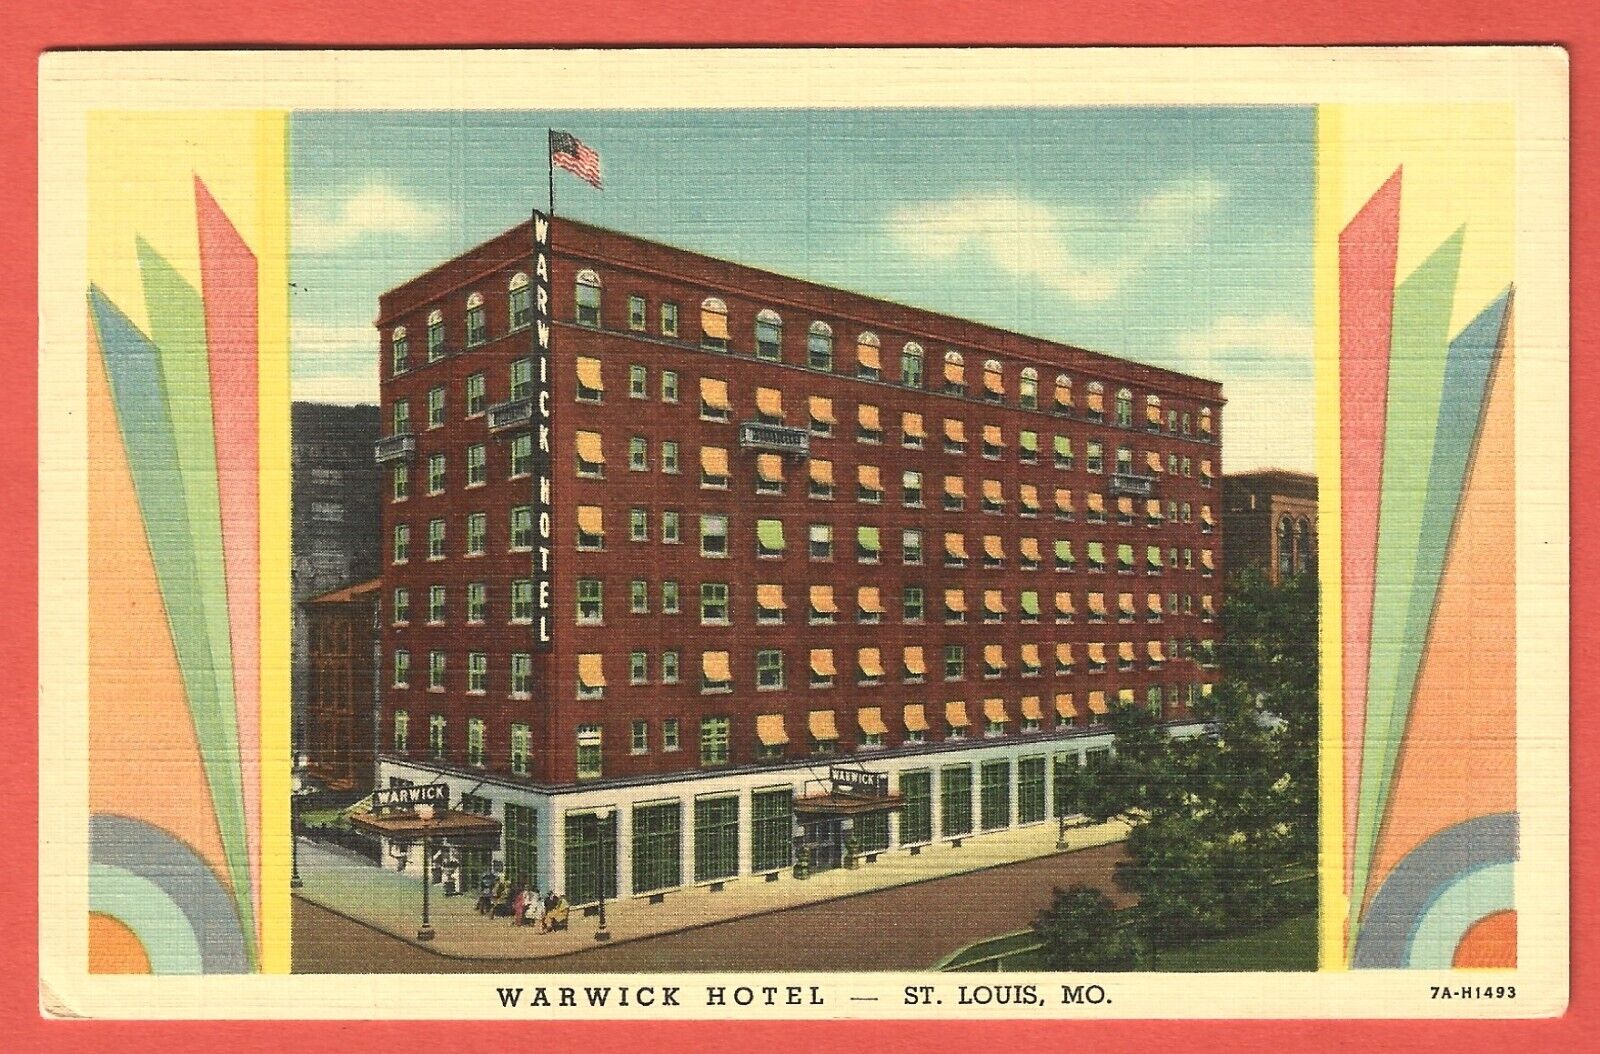 WARWICK HOTEL, ST. LOUIS, MISSOURI - 1937 Linen Postcard